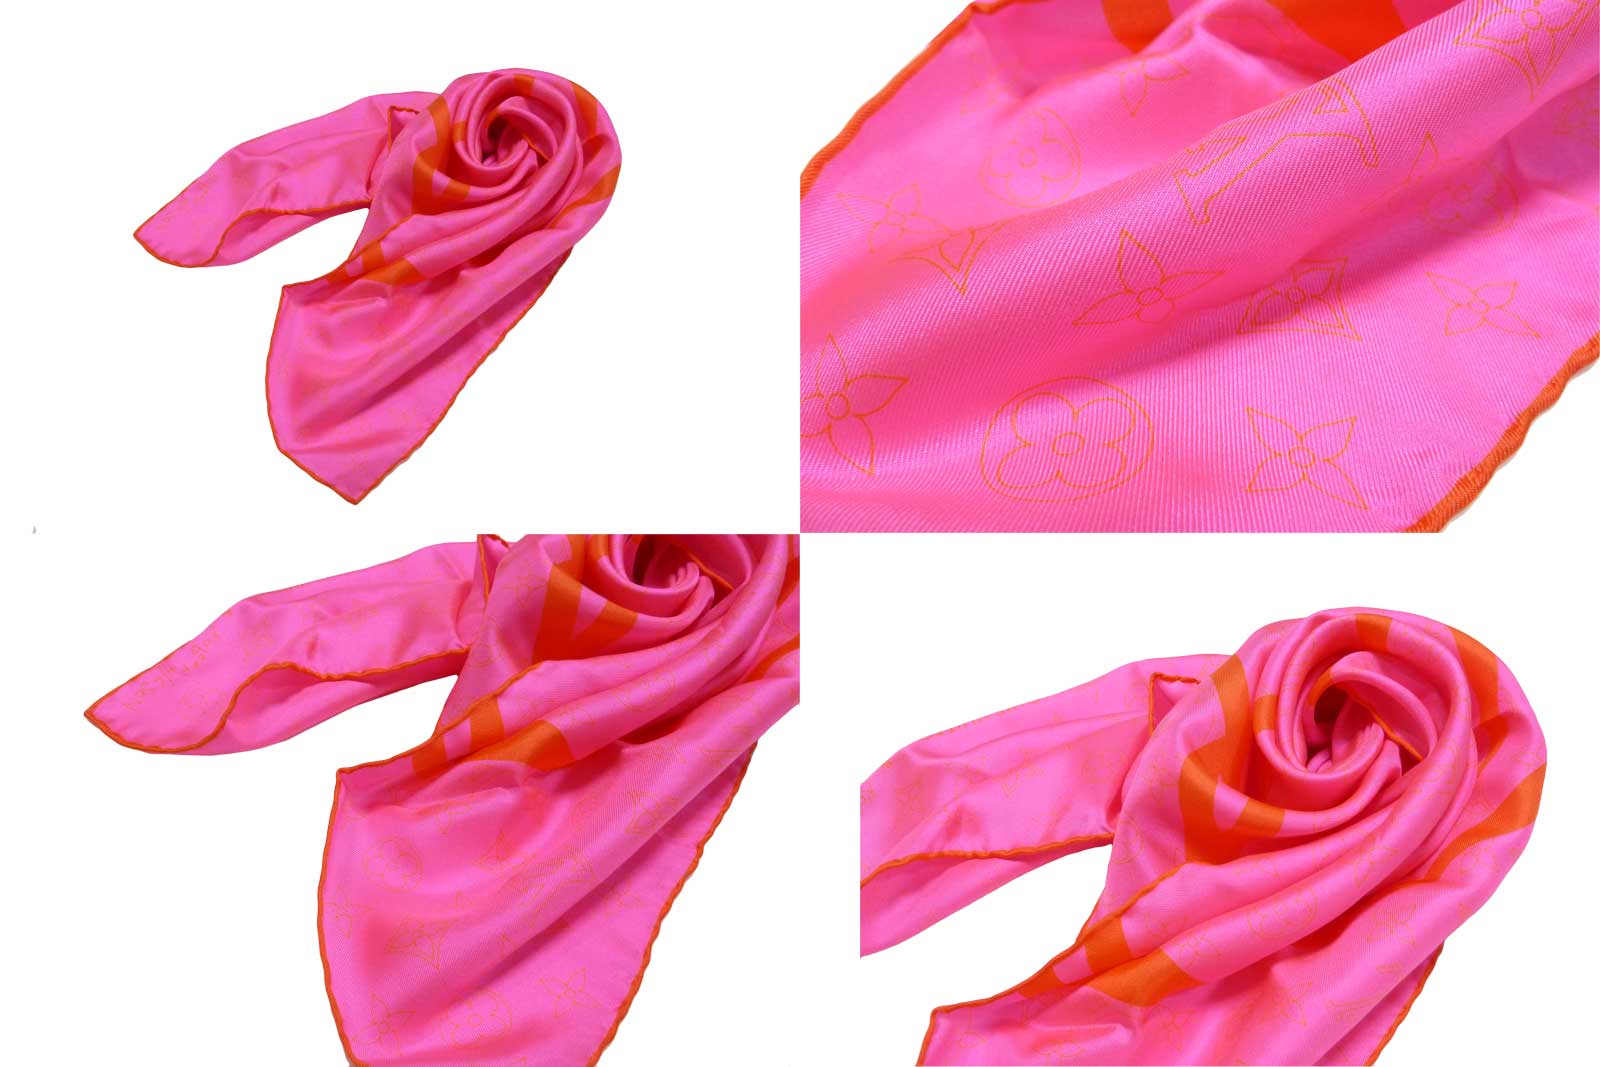 Auth Louis Vuitton Monogram Print Handkerchief Scarf Hot Pink/Orange Silk e11065 | eBay